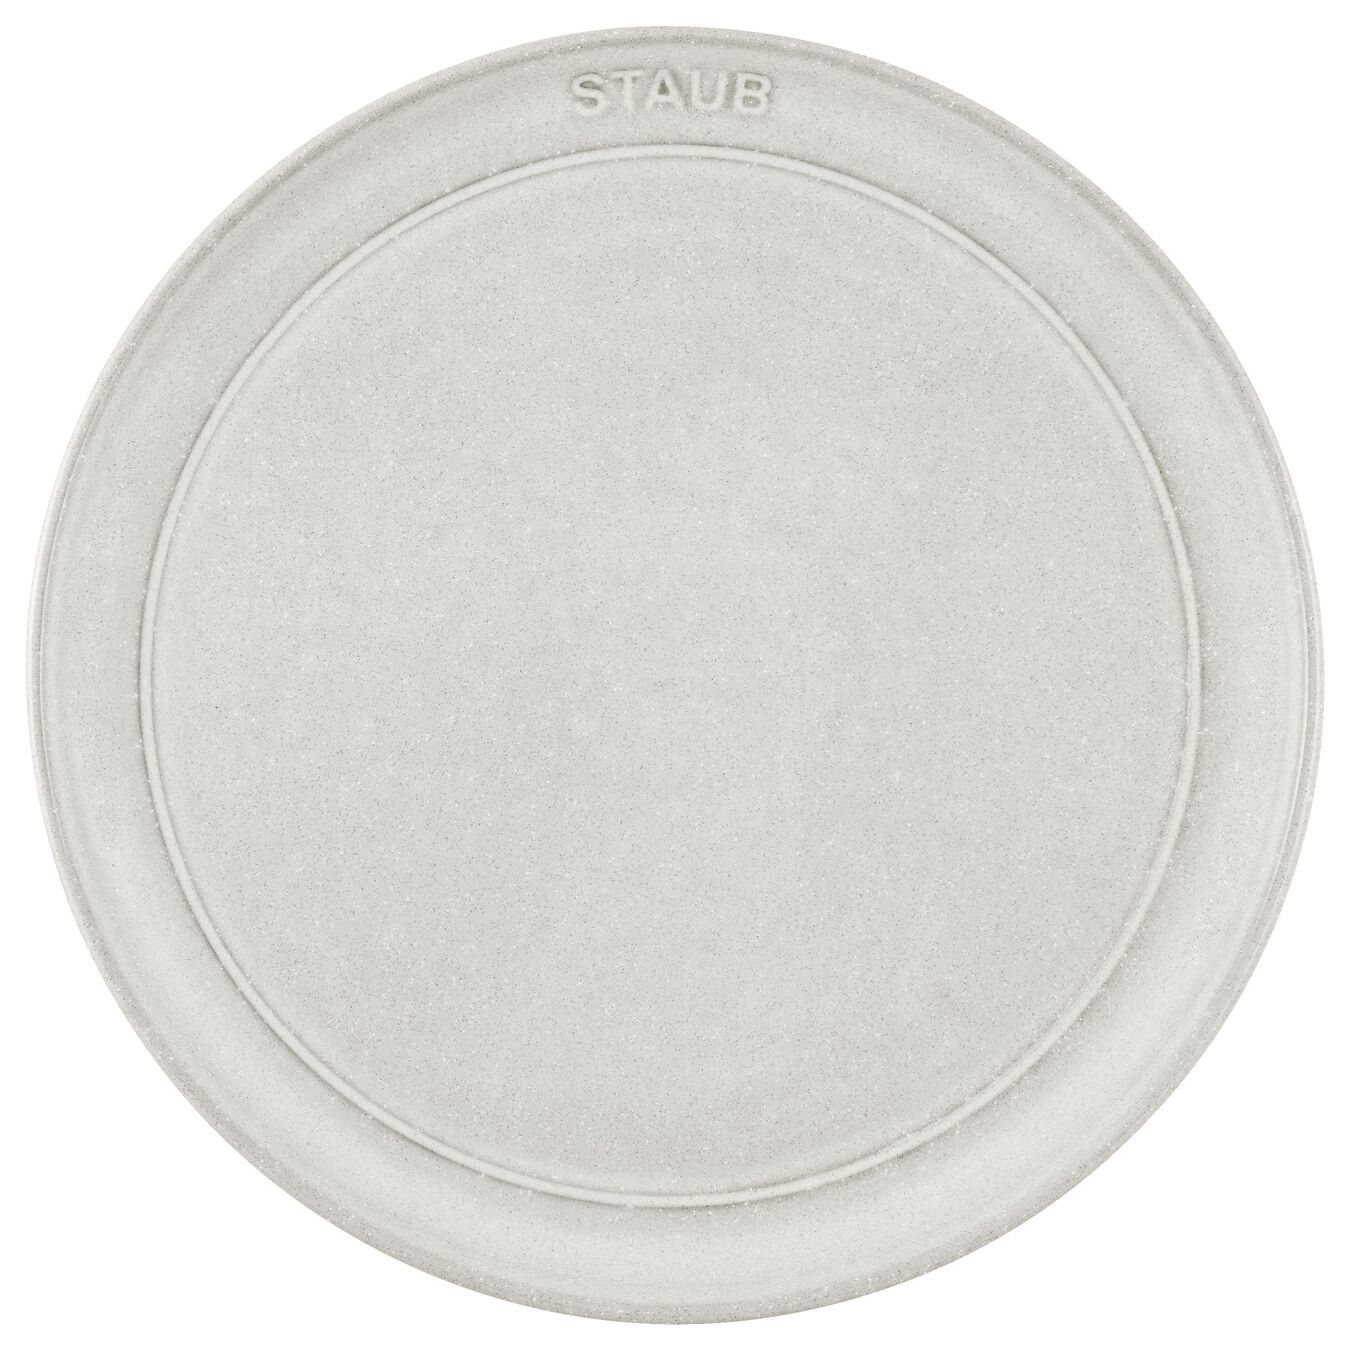 22 cm ceramic round Plate flat, white truffle,,large 2